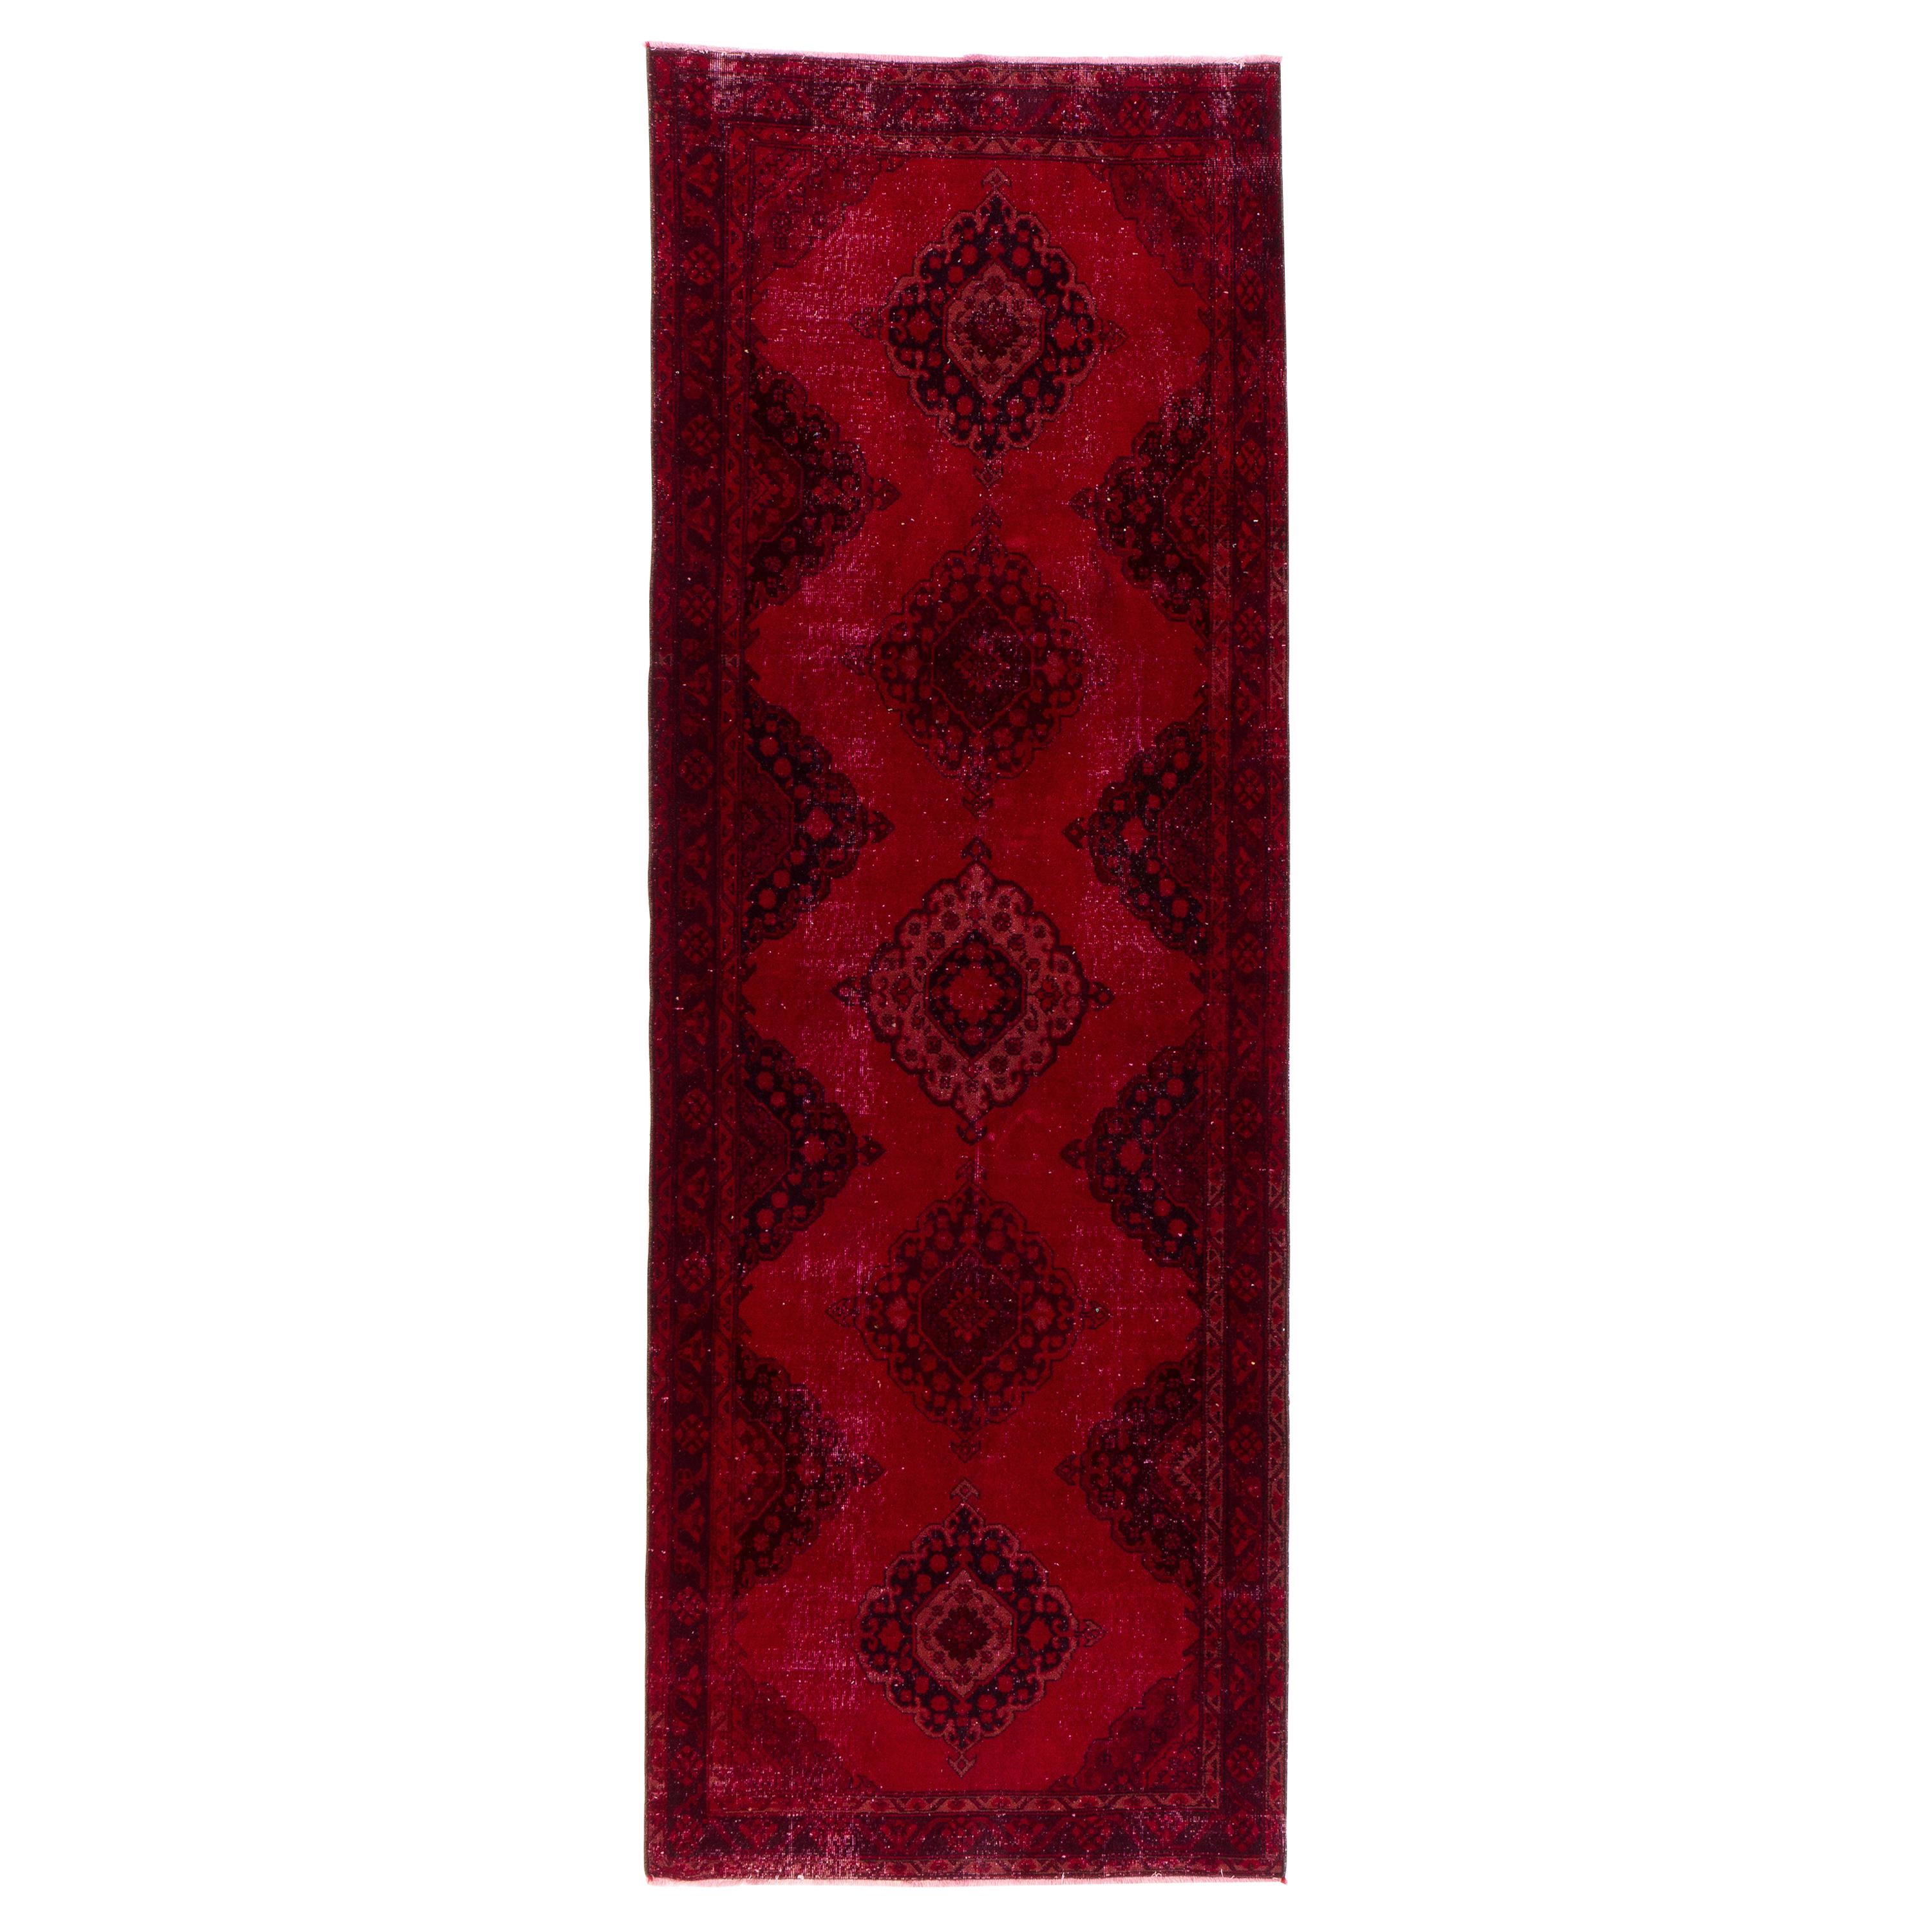 4.8x13 Ft Vintage Handmade Konya Sille Runner Rug Over-Dyed in Red for Hallway